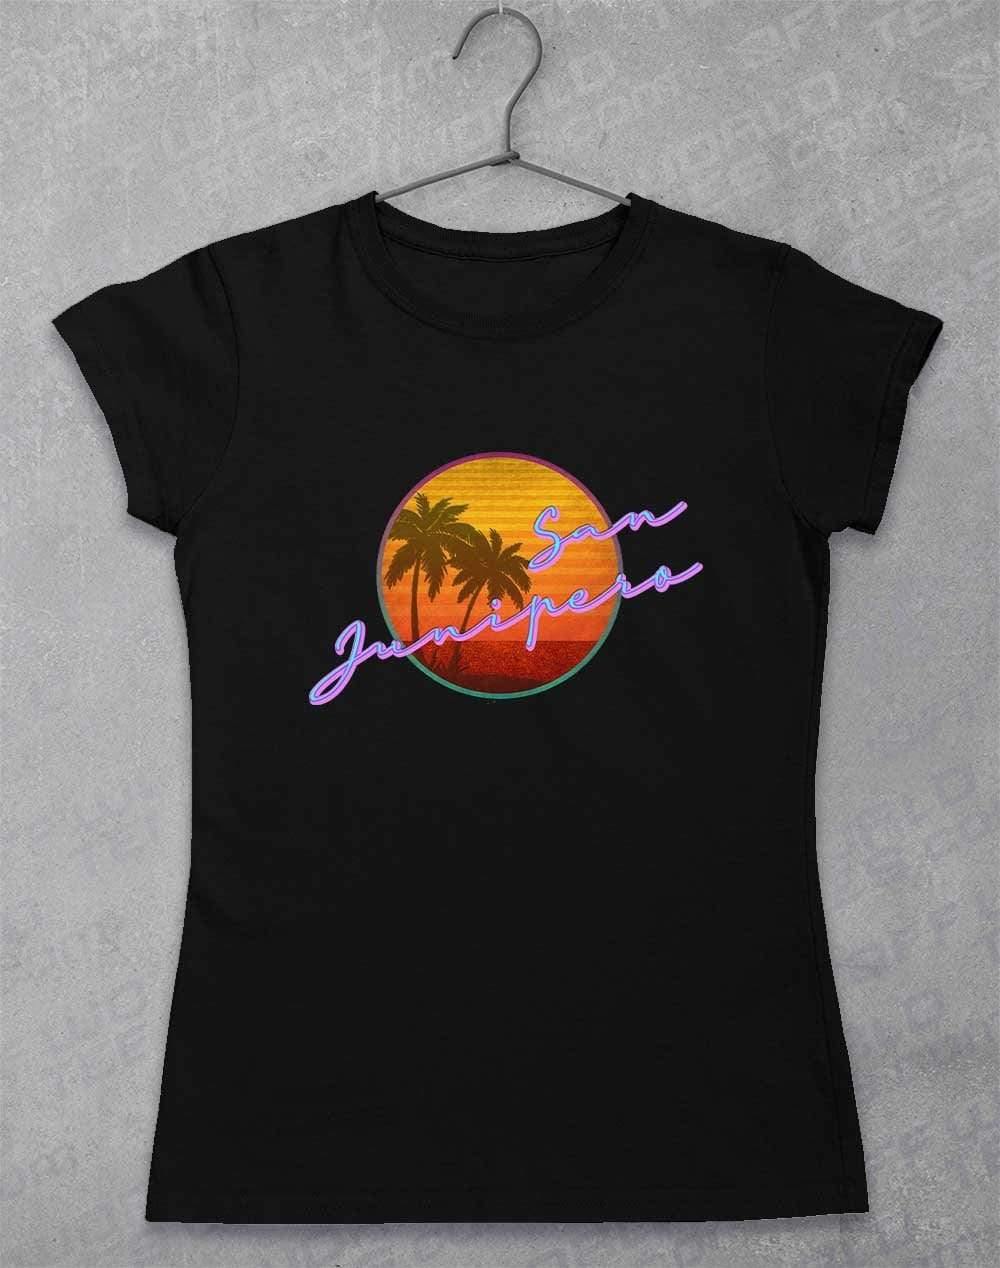 San Junipero 80s Neon Womens T-Shirt - Off World Tees